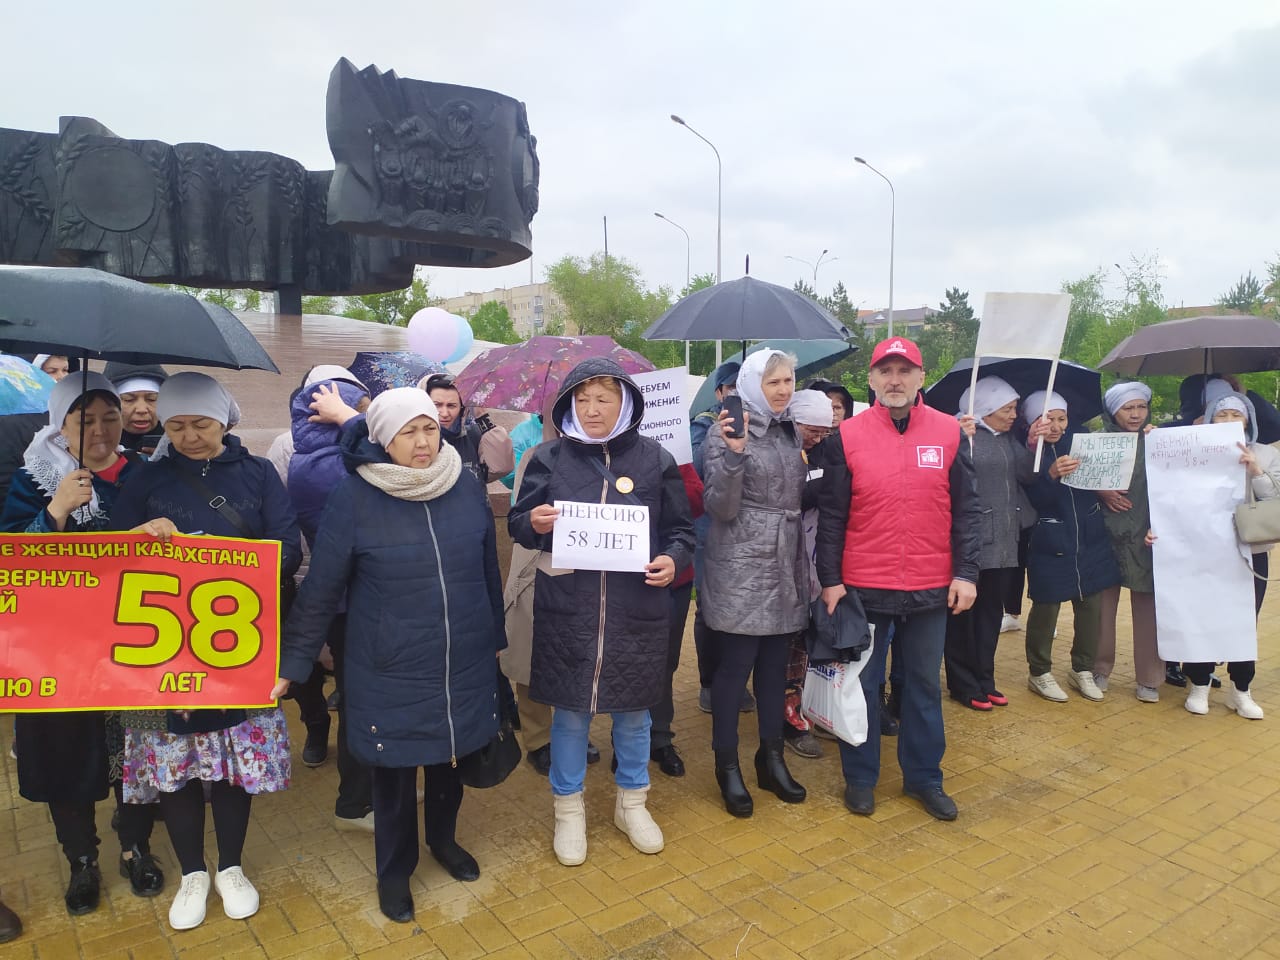 Митинг за снижение пенсионного возраста до 58 лет прошел в Костанае